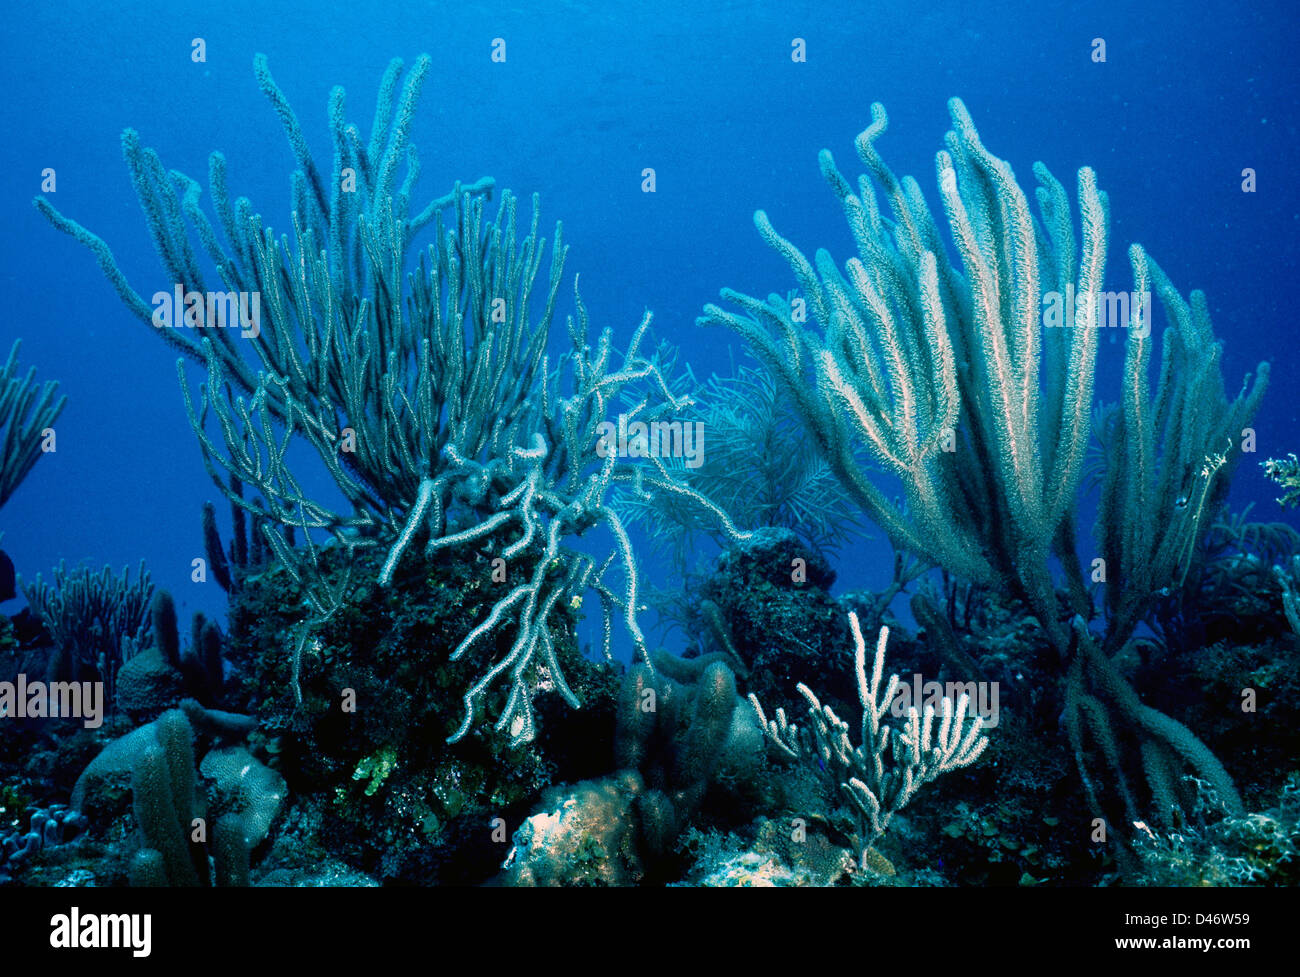 Knobby Sea rod, Eunicea sp., Giant slit pore Sea Rod, Plexaurella nutans, Gorgoniaceae, Octocoral. Cuba, Carribean Sea Stock Photo